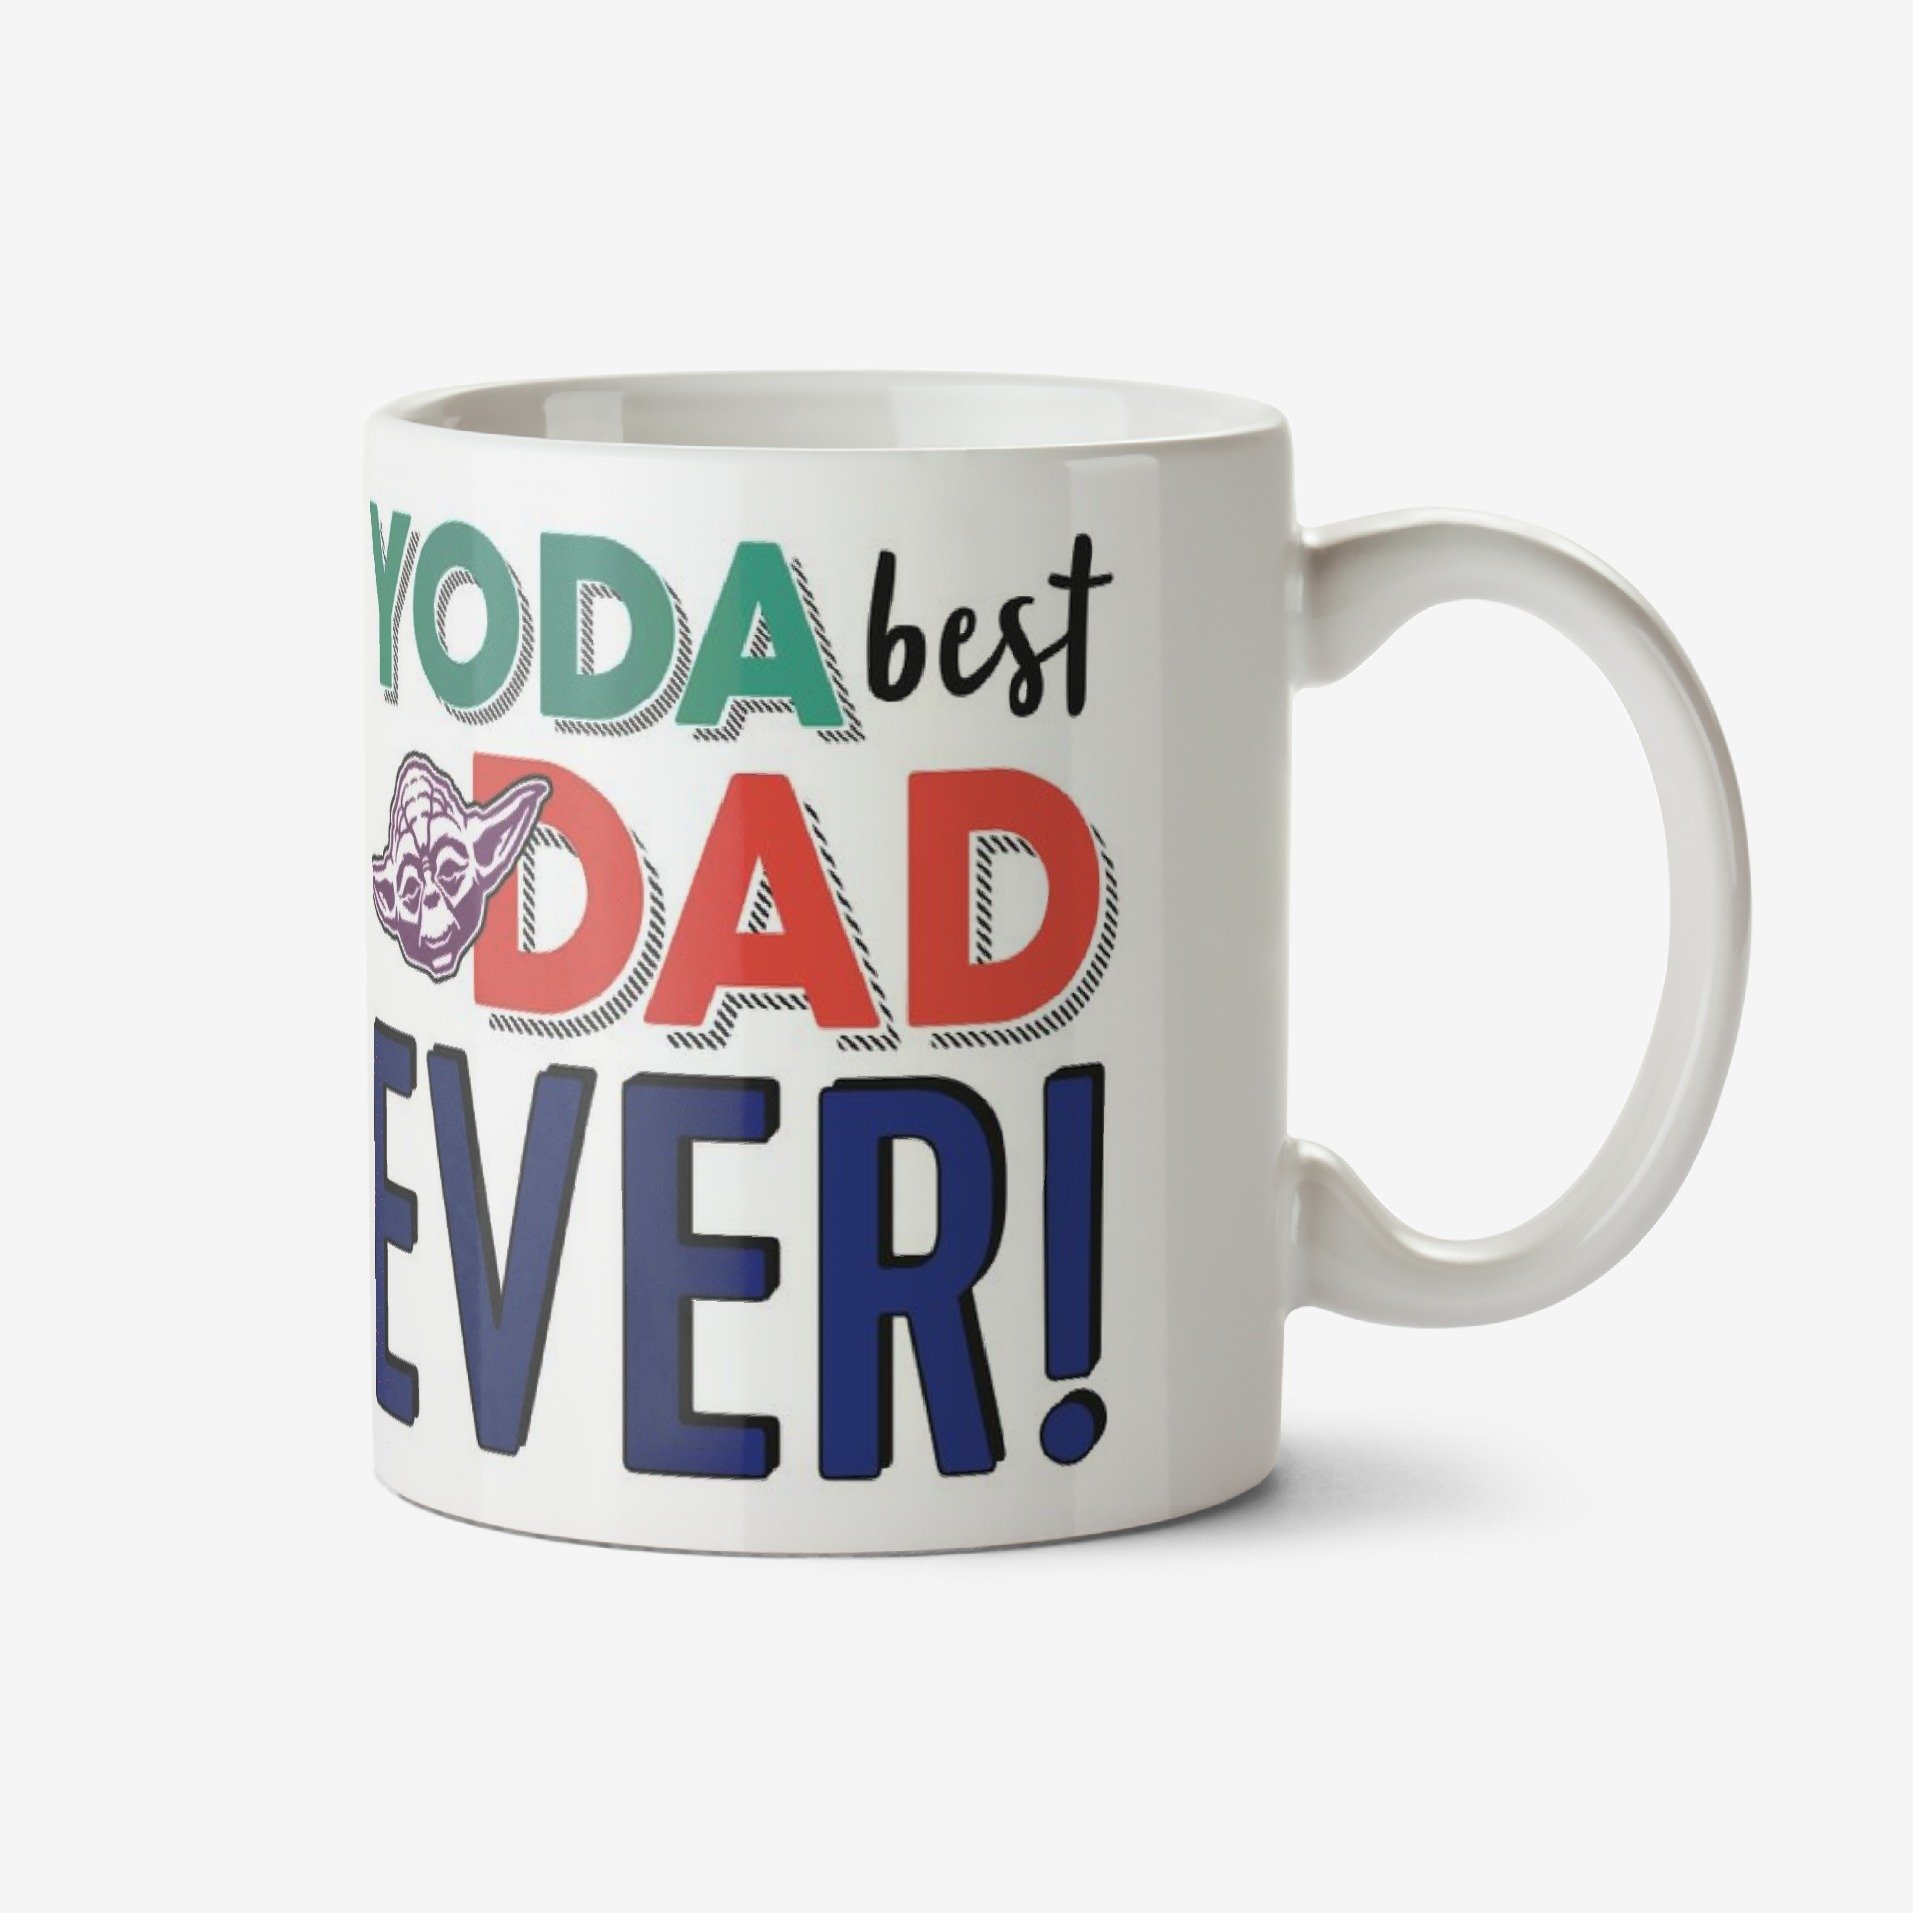 Star Wars Yoda Best Dad Ever Mug Ceramic Mug